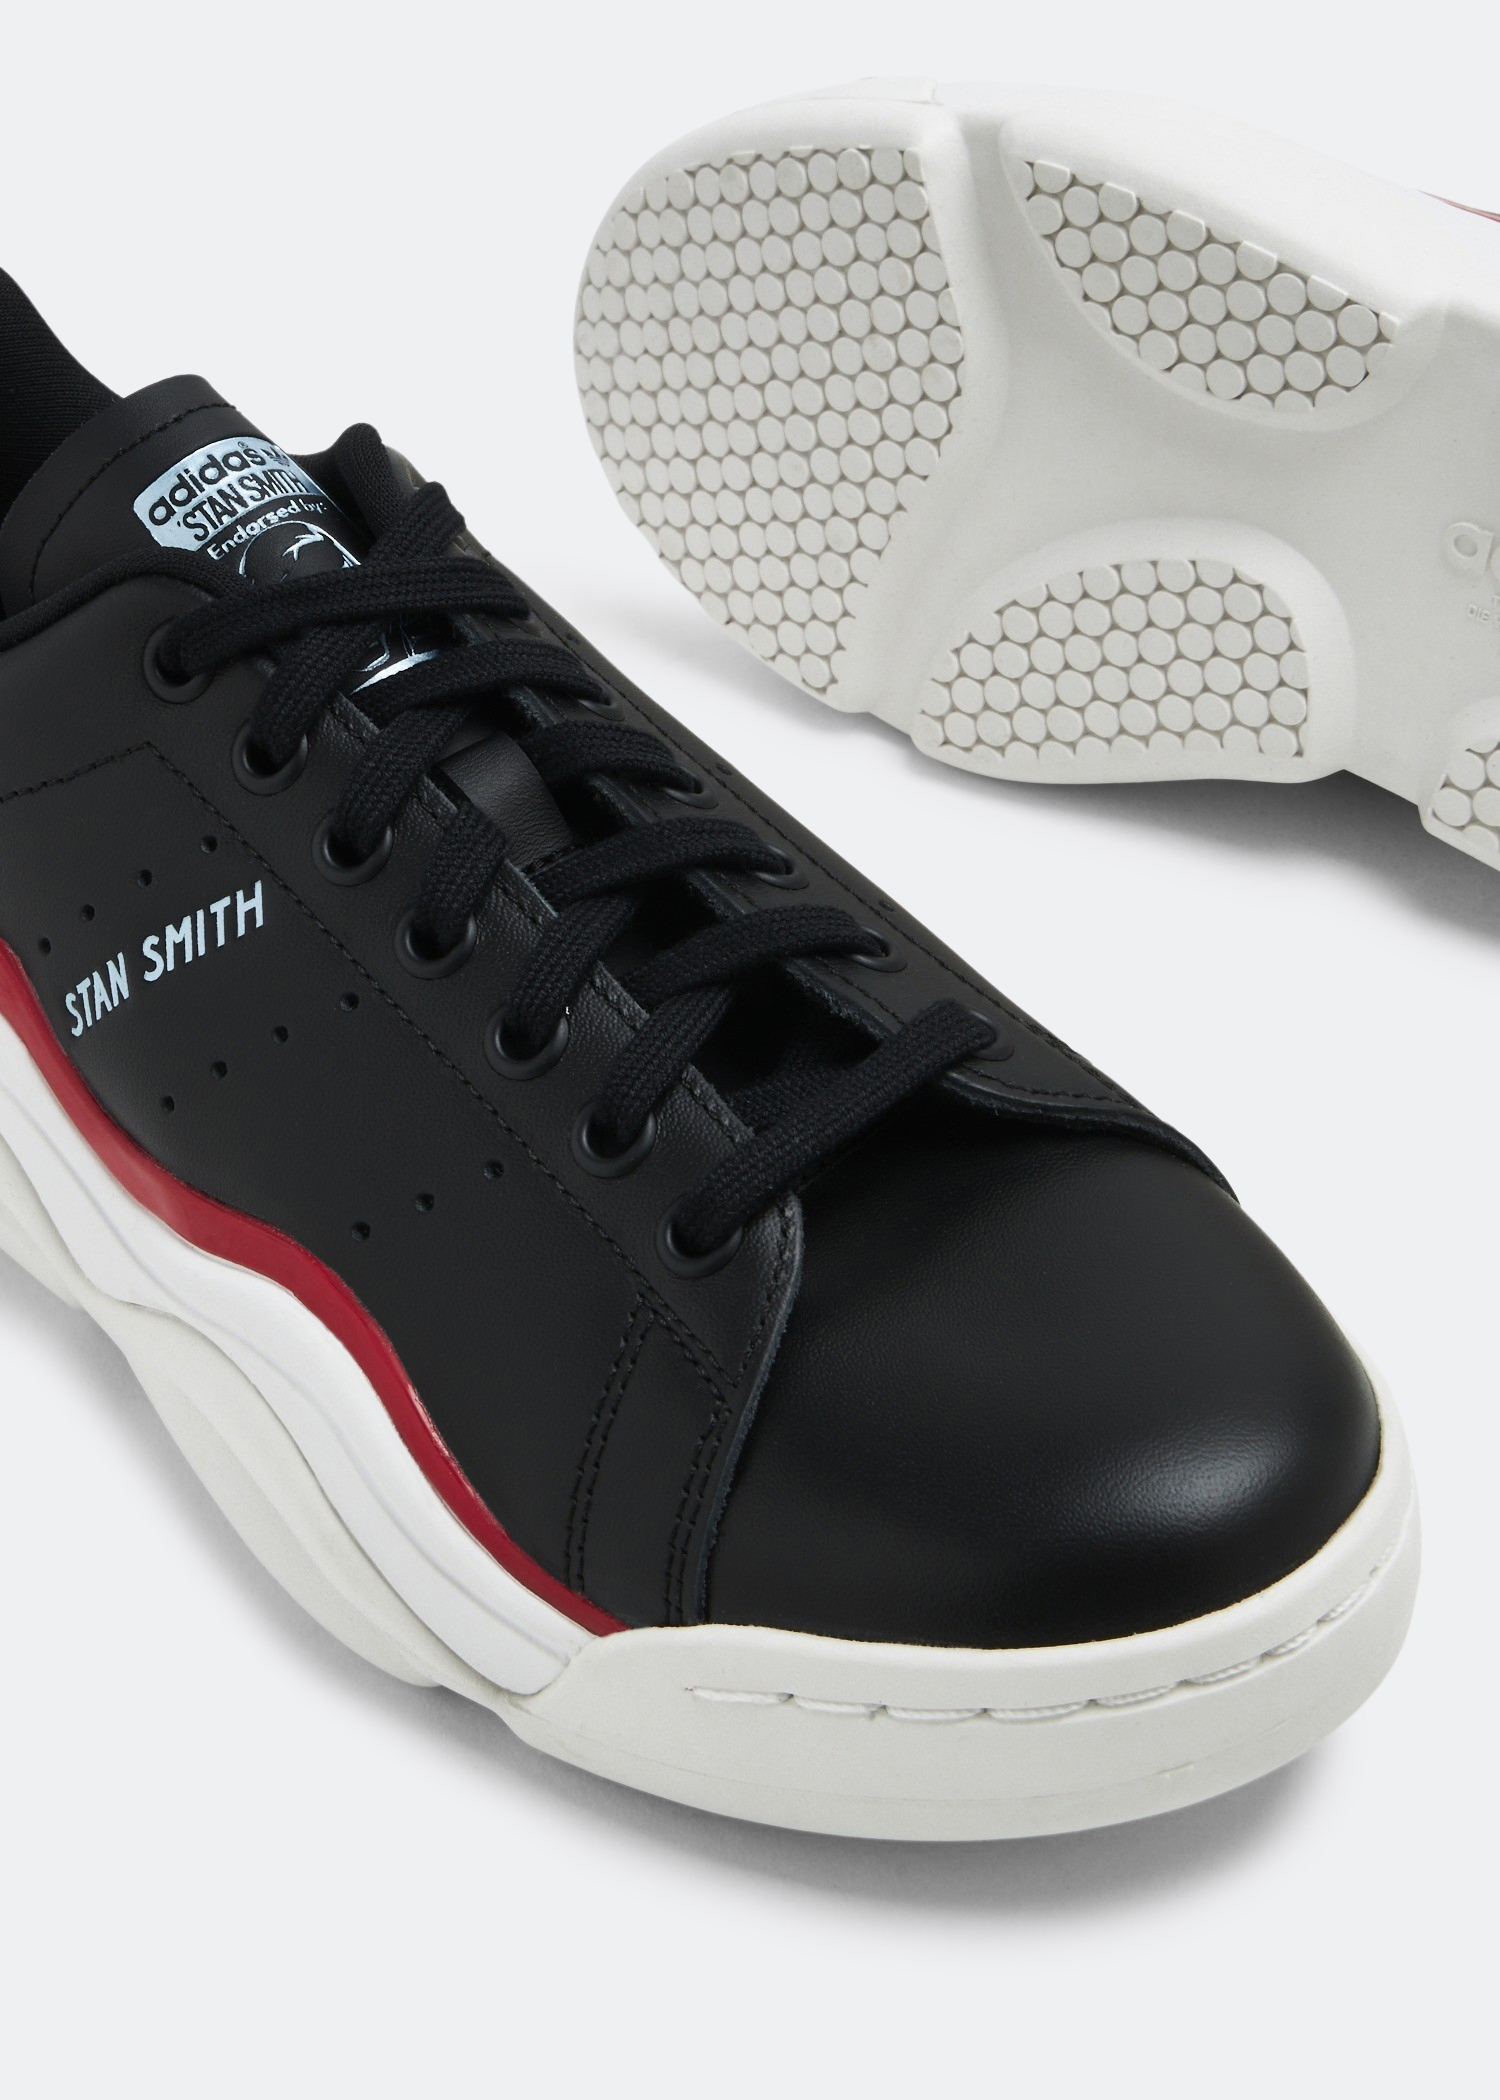 Adidas Stan Smith Millencon sneakers for Women - Black in KSA